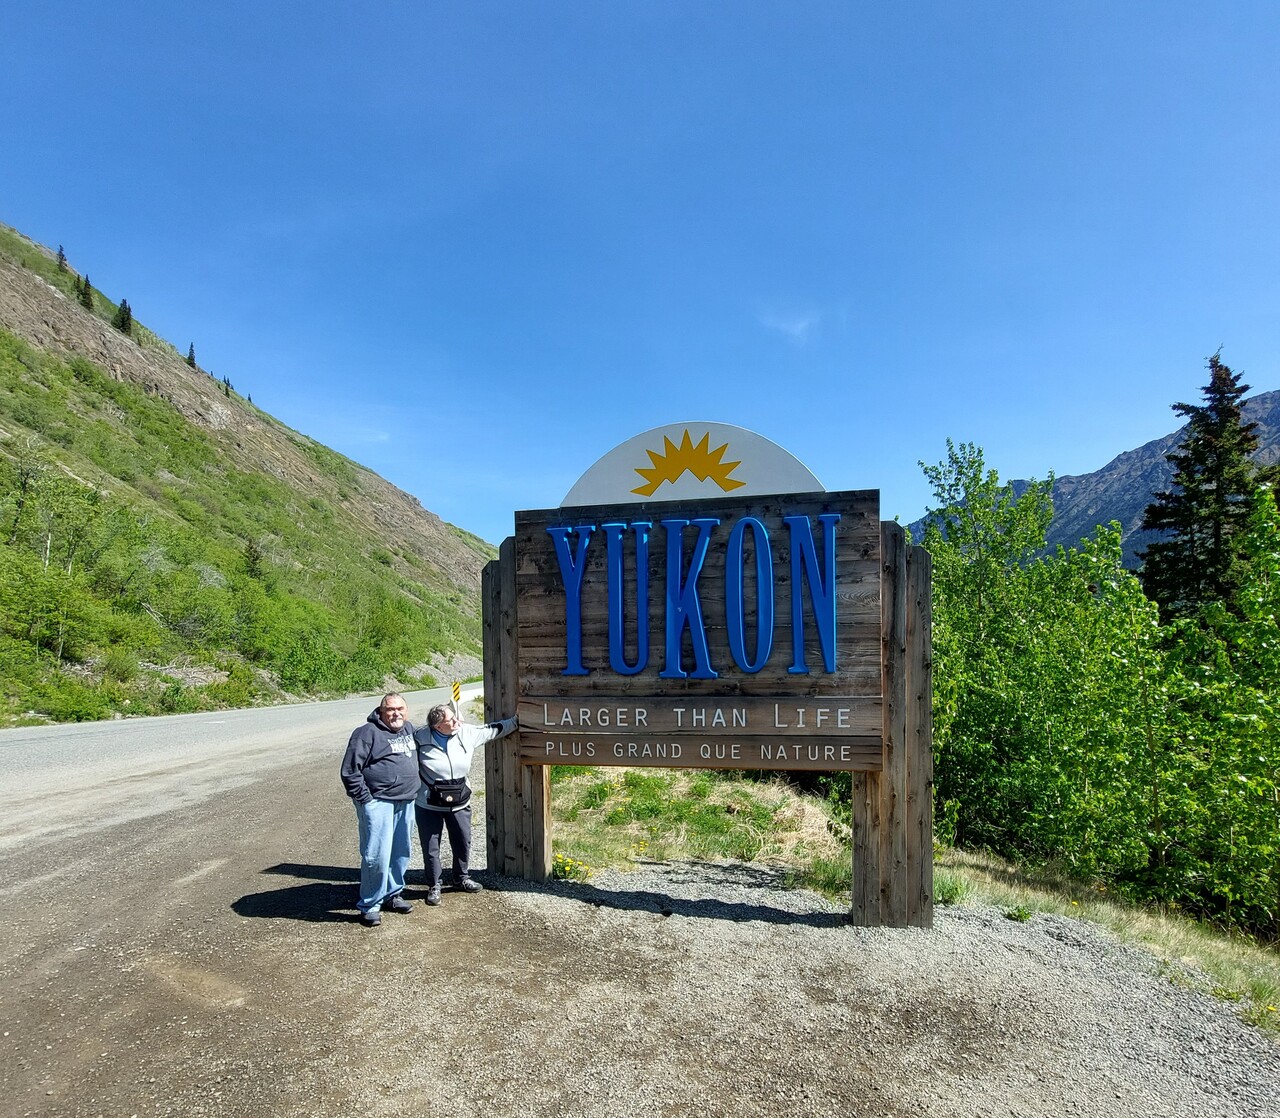 Klondike-Hwy---Yukon-sign-and-lake-area-1.jpg